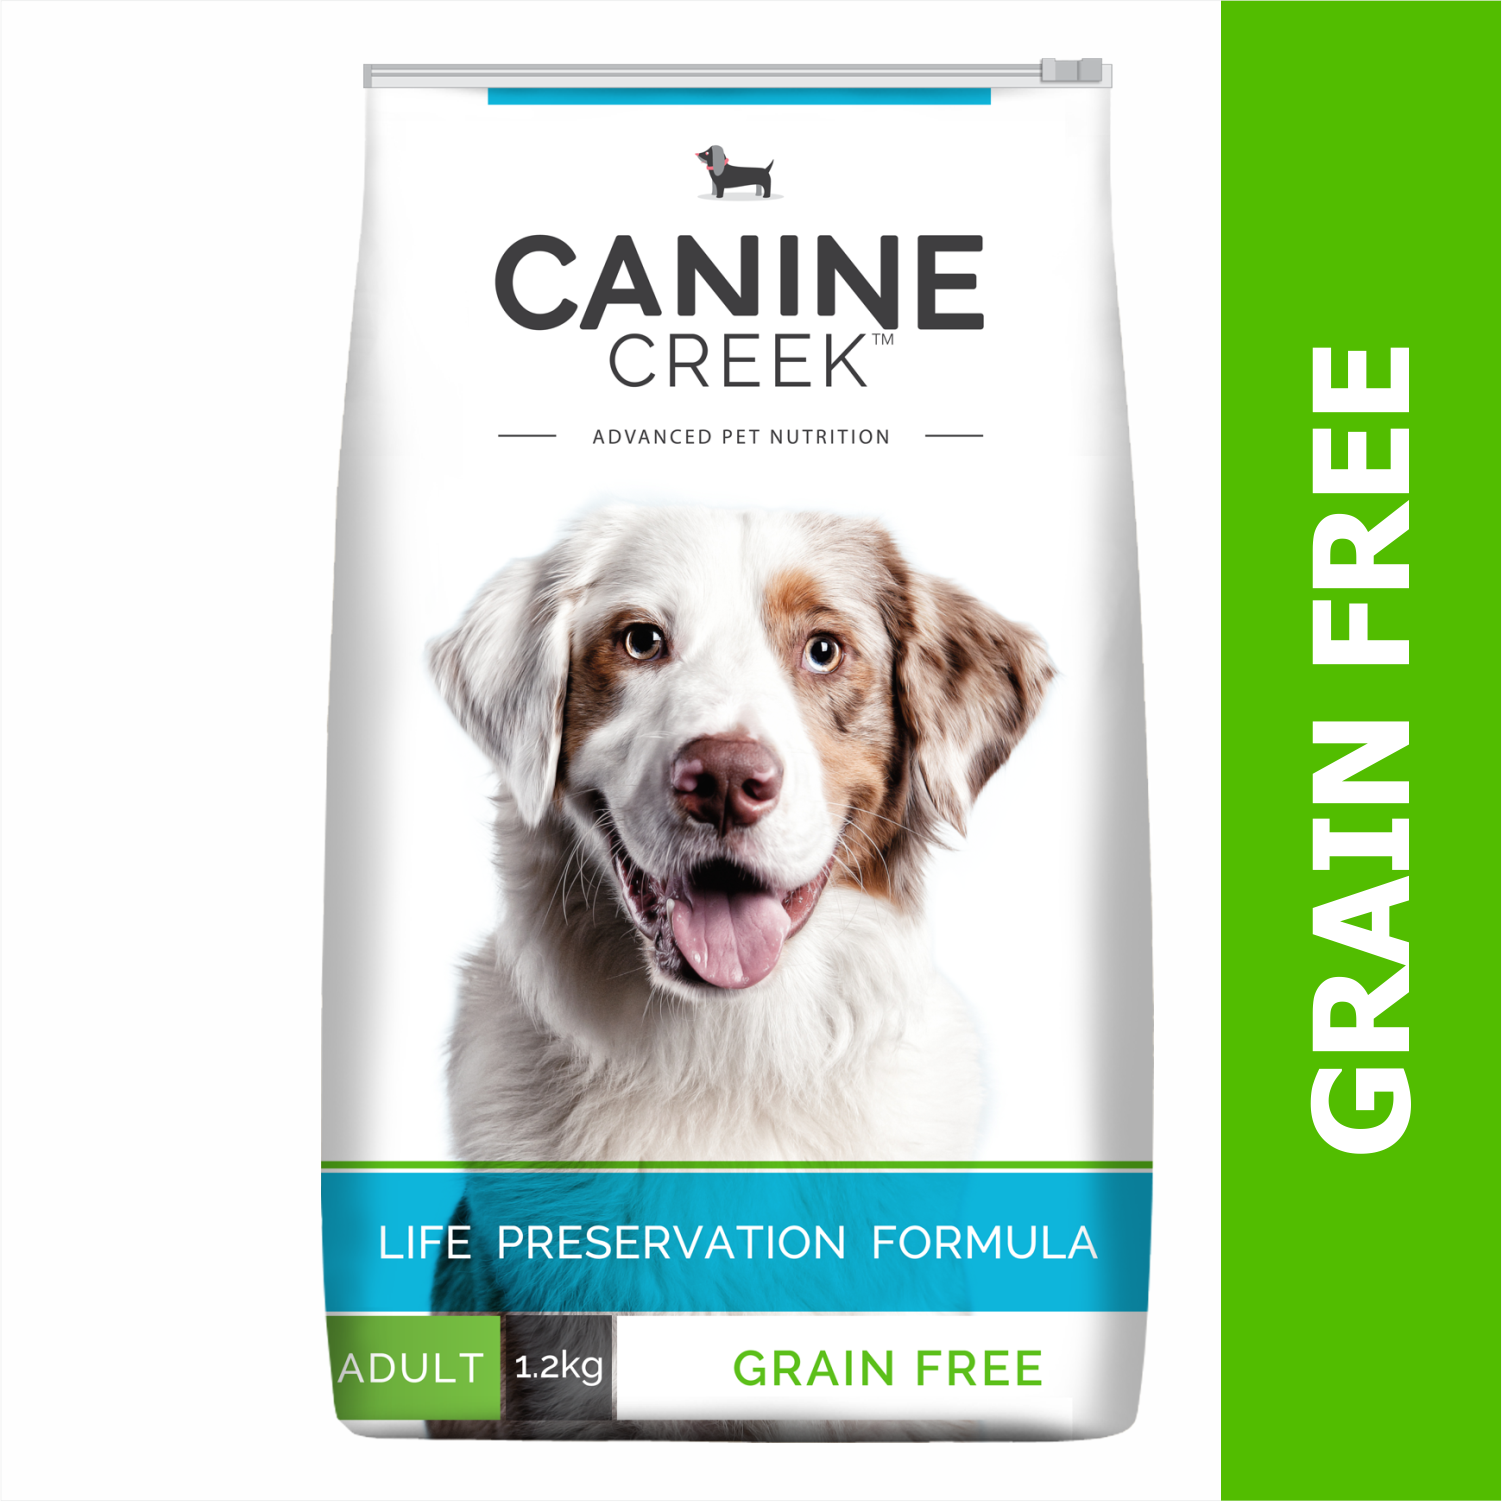 Canine Creek Ultra Premium Adult Dog Dry Food